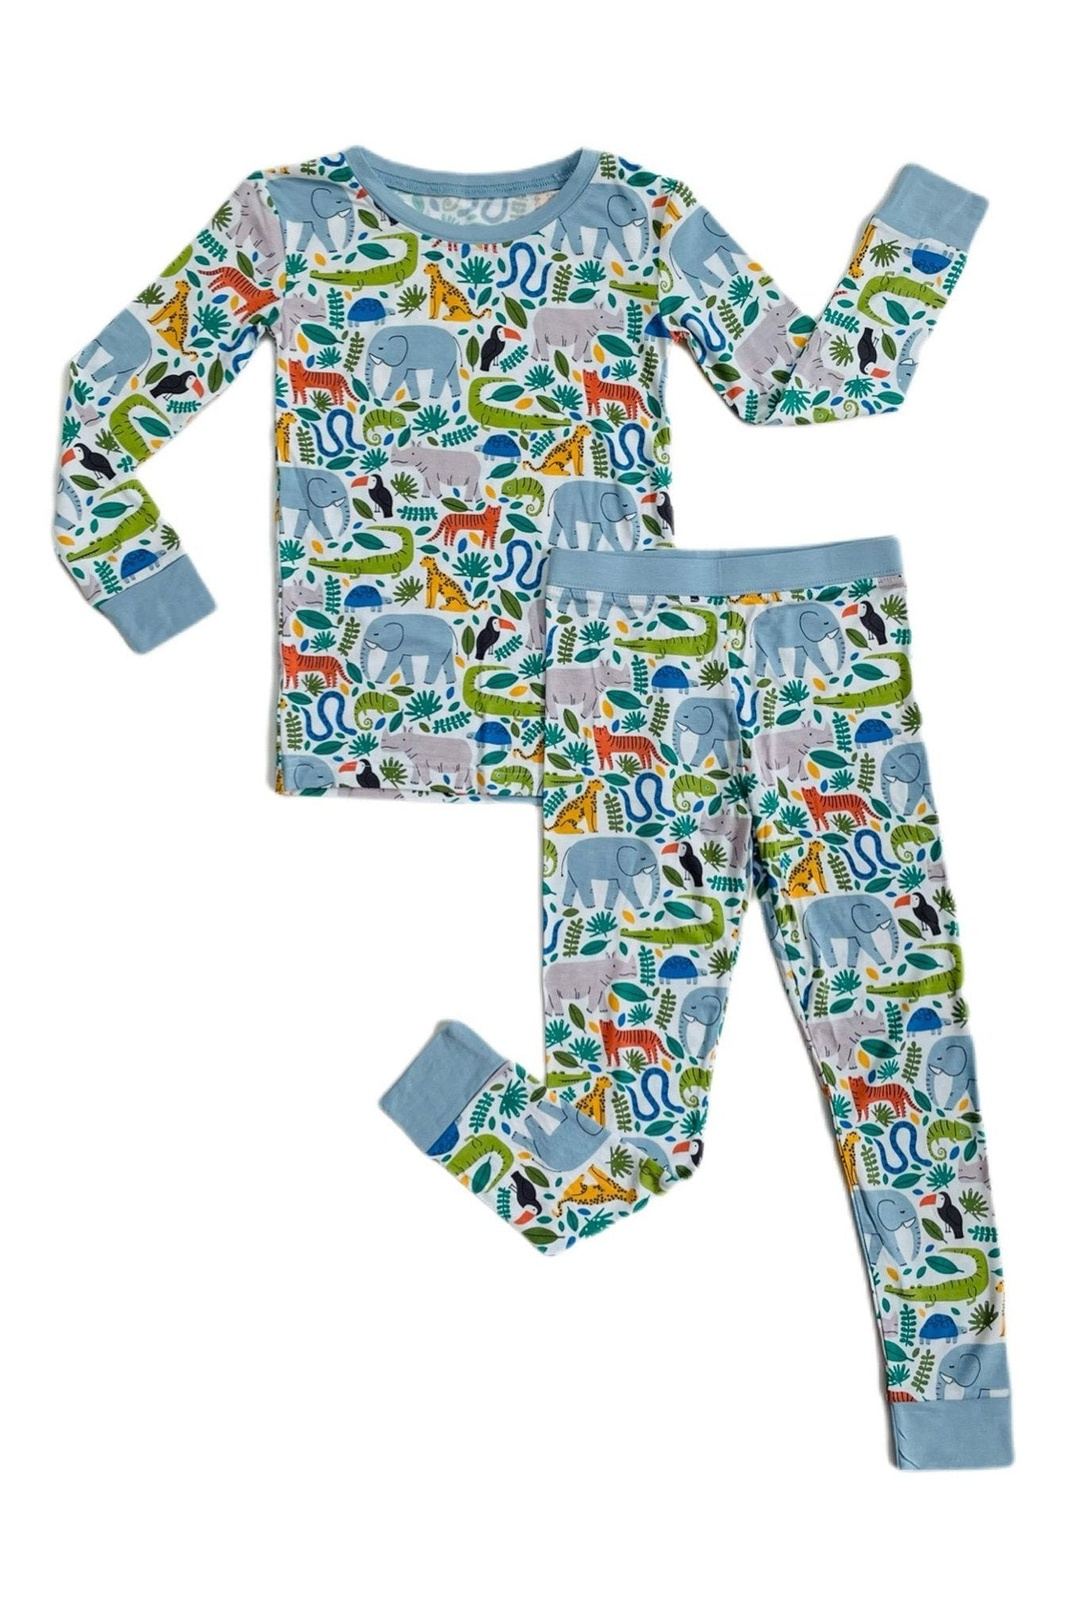 Jungle Safari Two-Piece Bamboo Viscose Pajama Set - Tea for Three: A Children's Boutique-New Arrivals-TheT43Shop